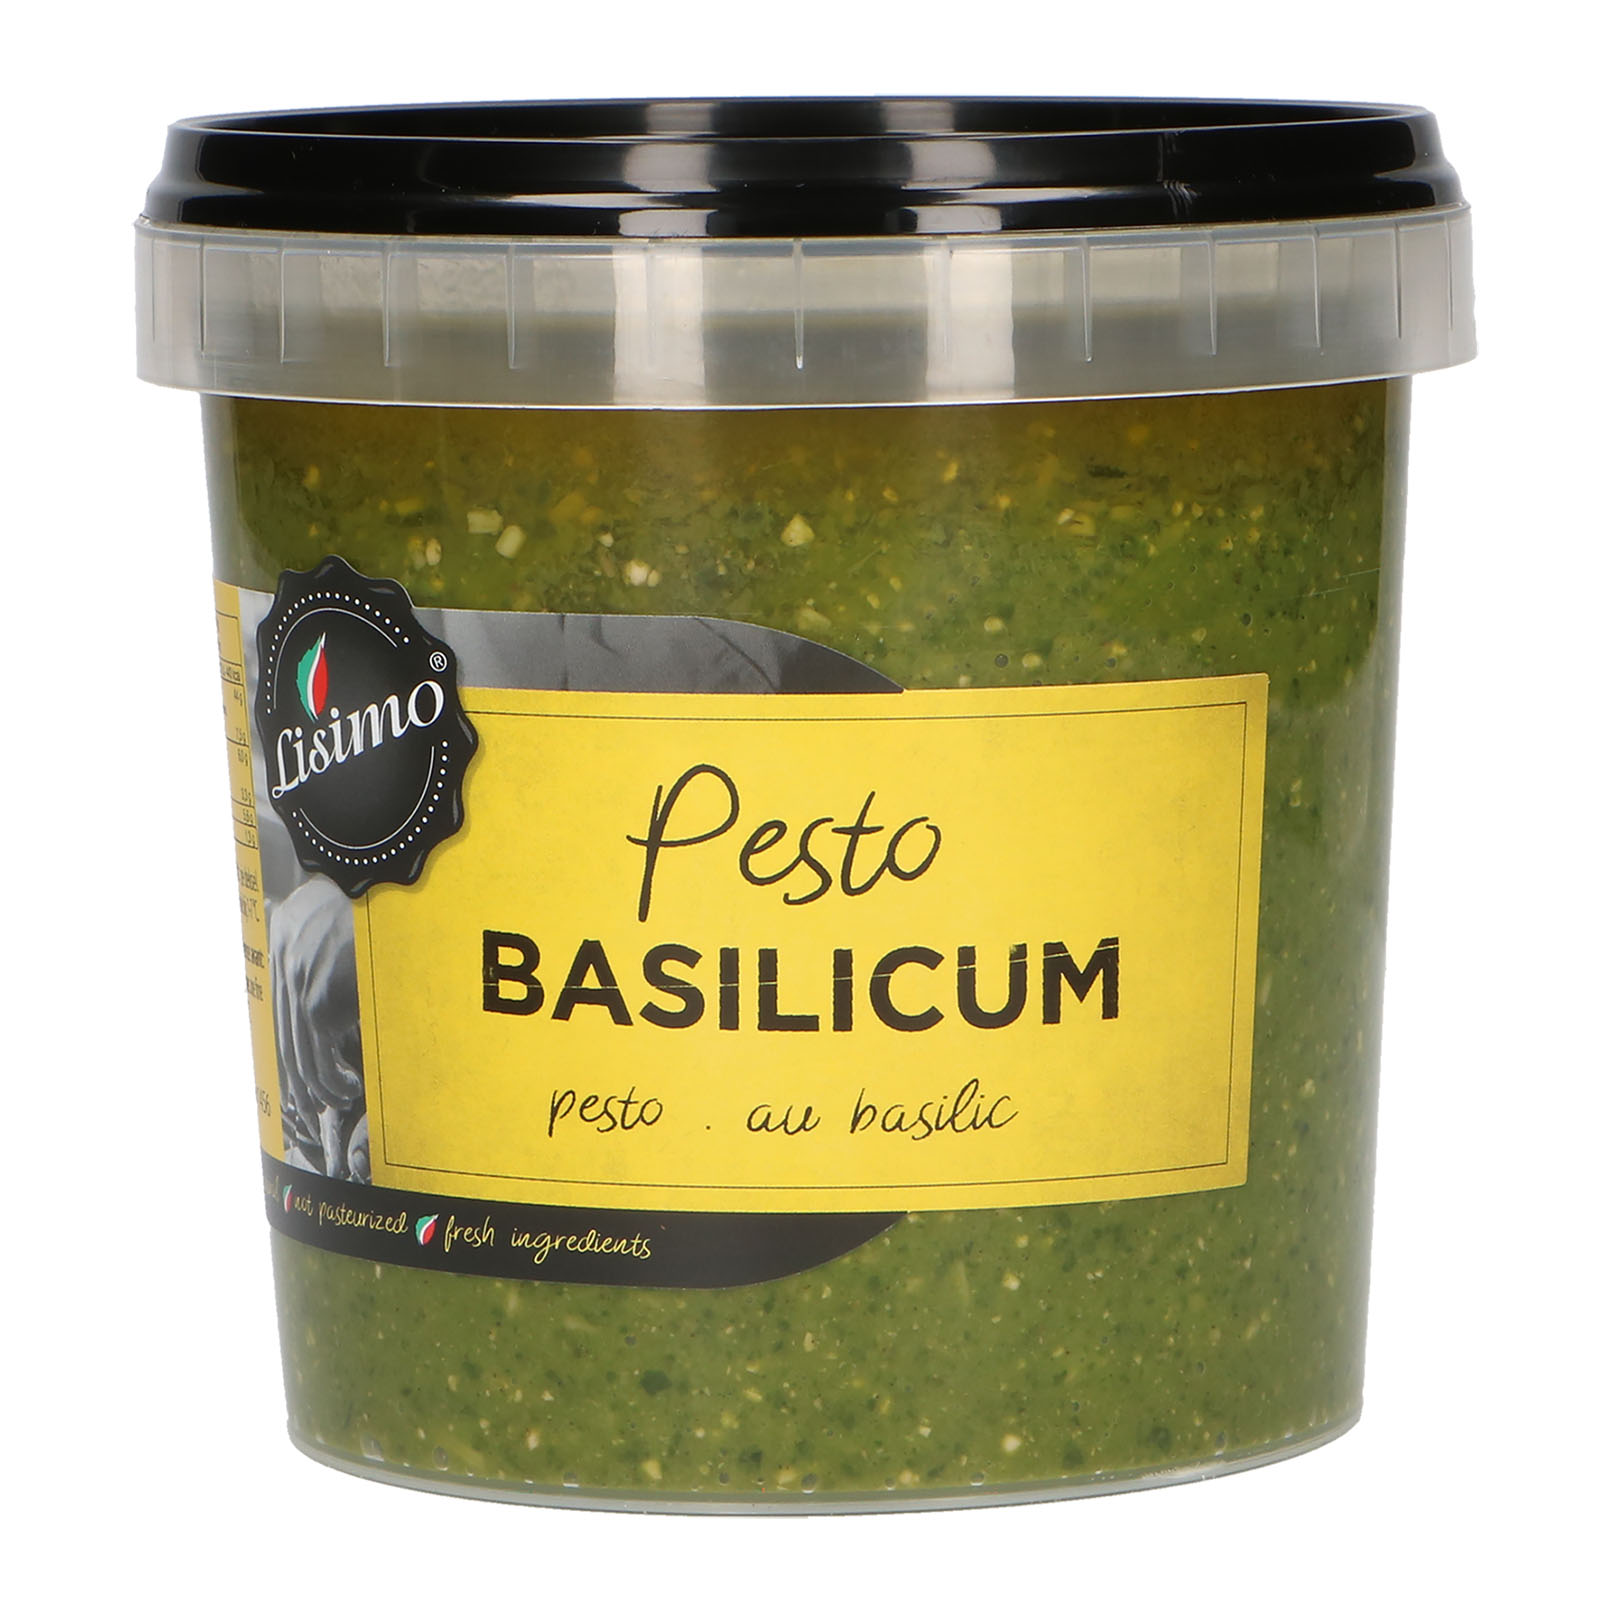 23469 Pesto lisimo groen basil 1,1kg